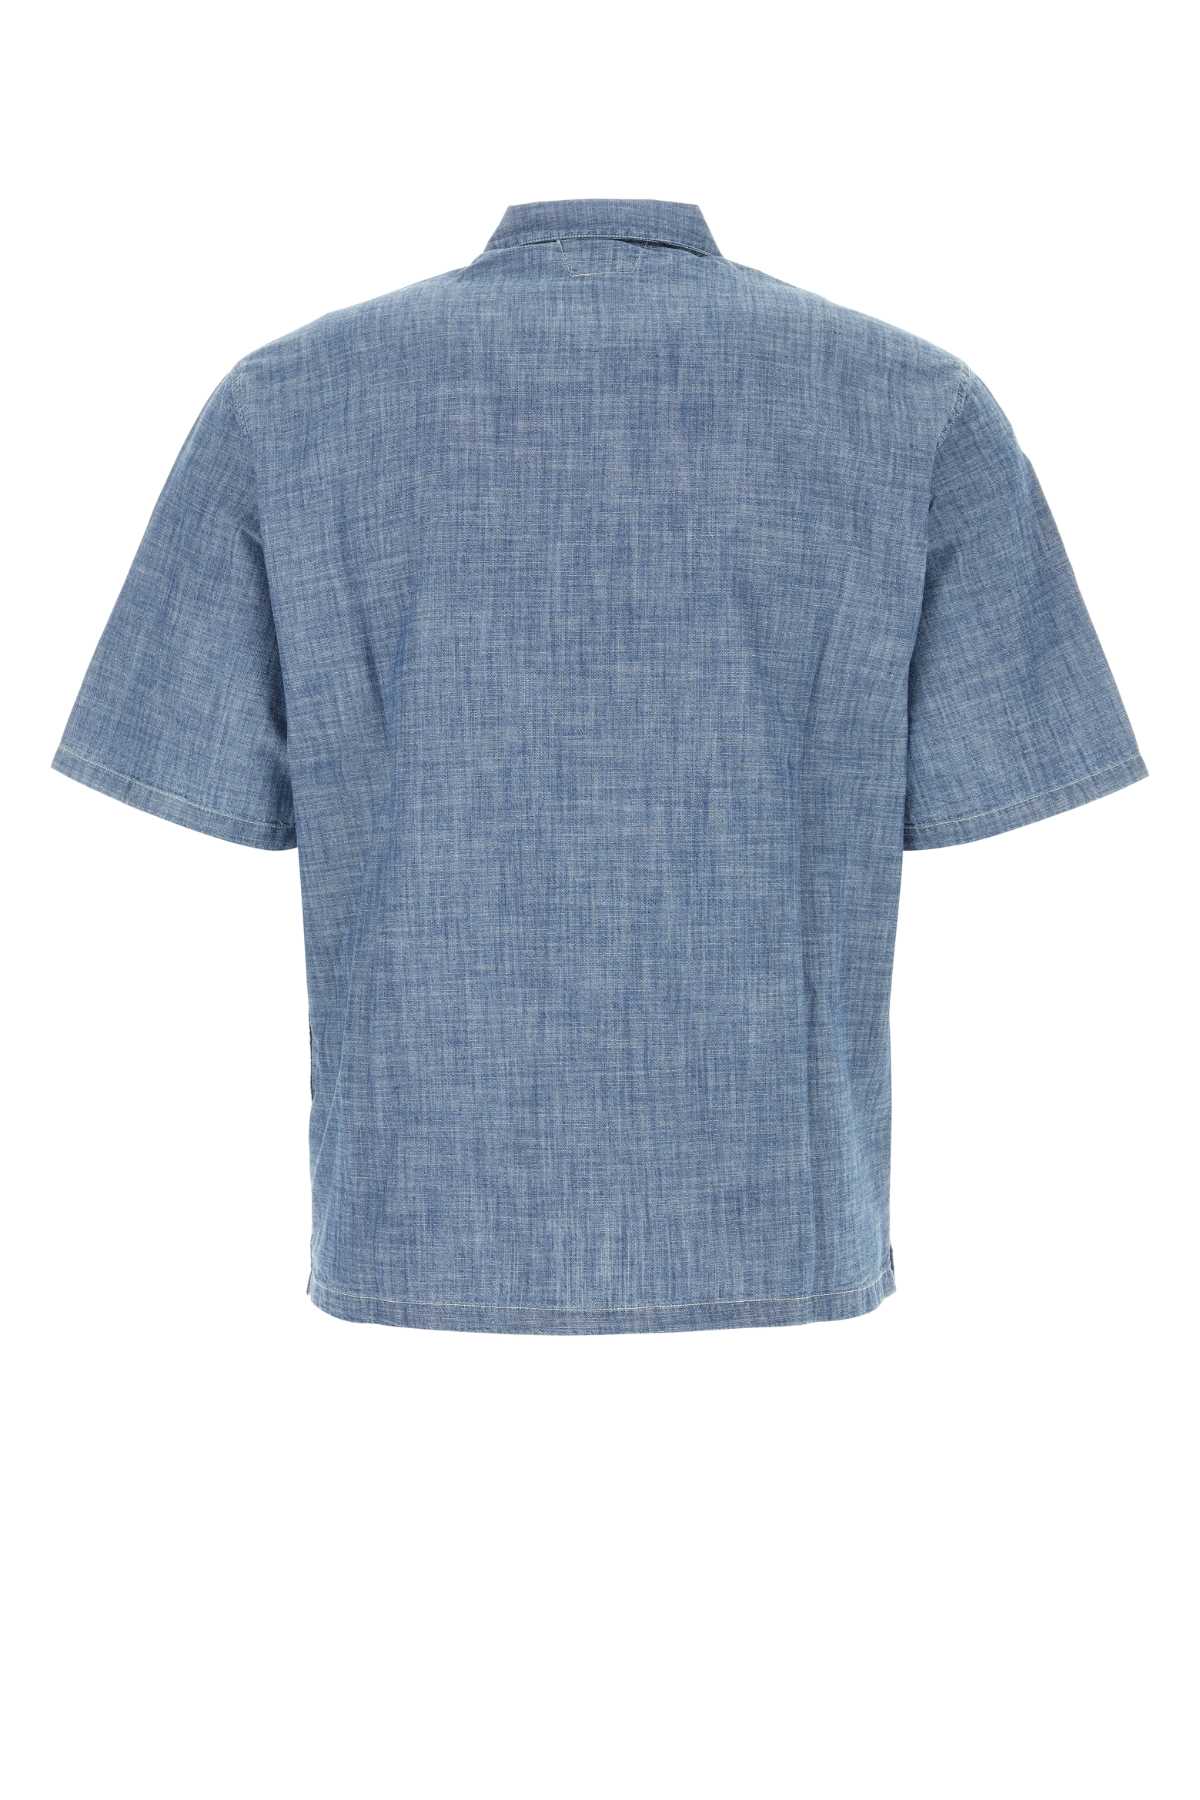 C.p. Company Denim Shirt In Stonebleach